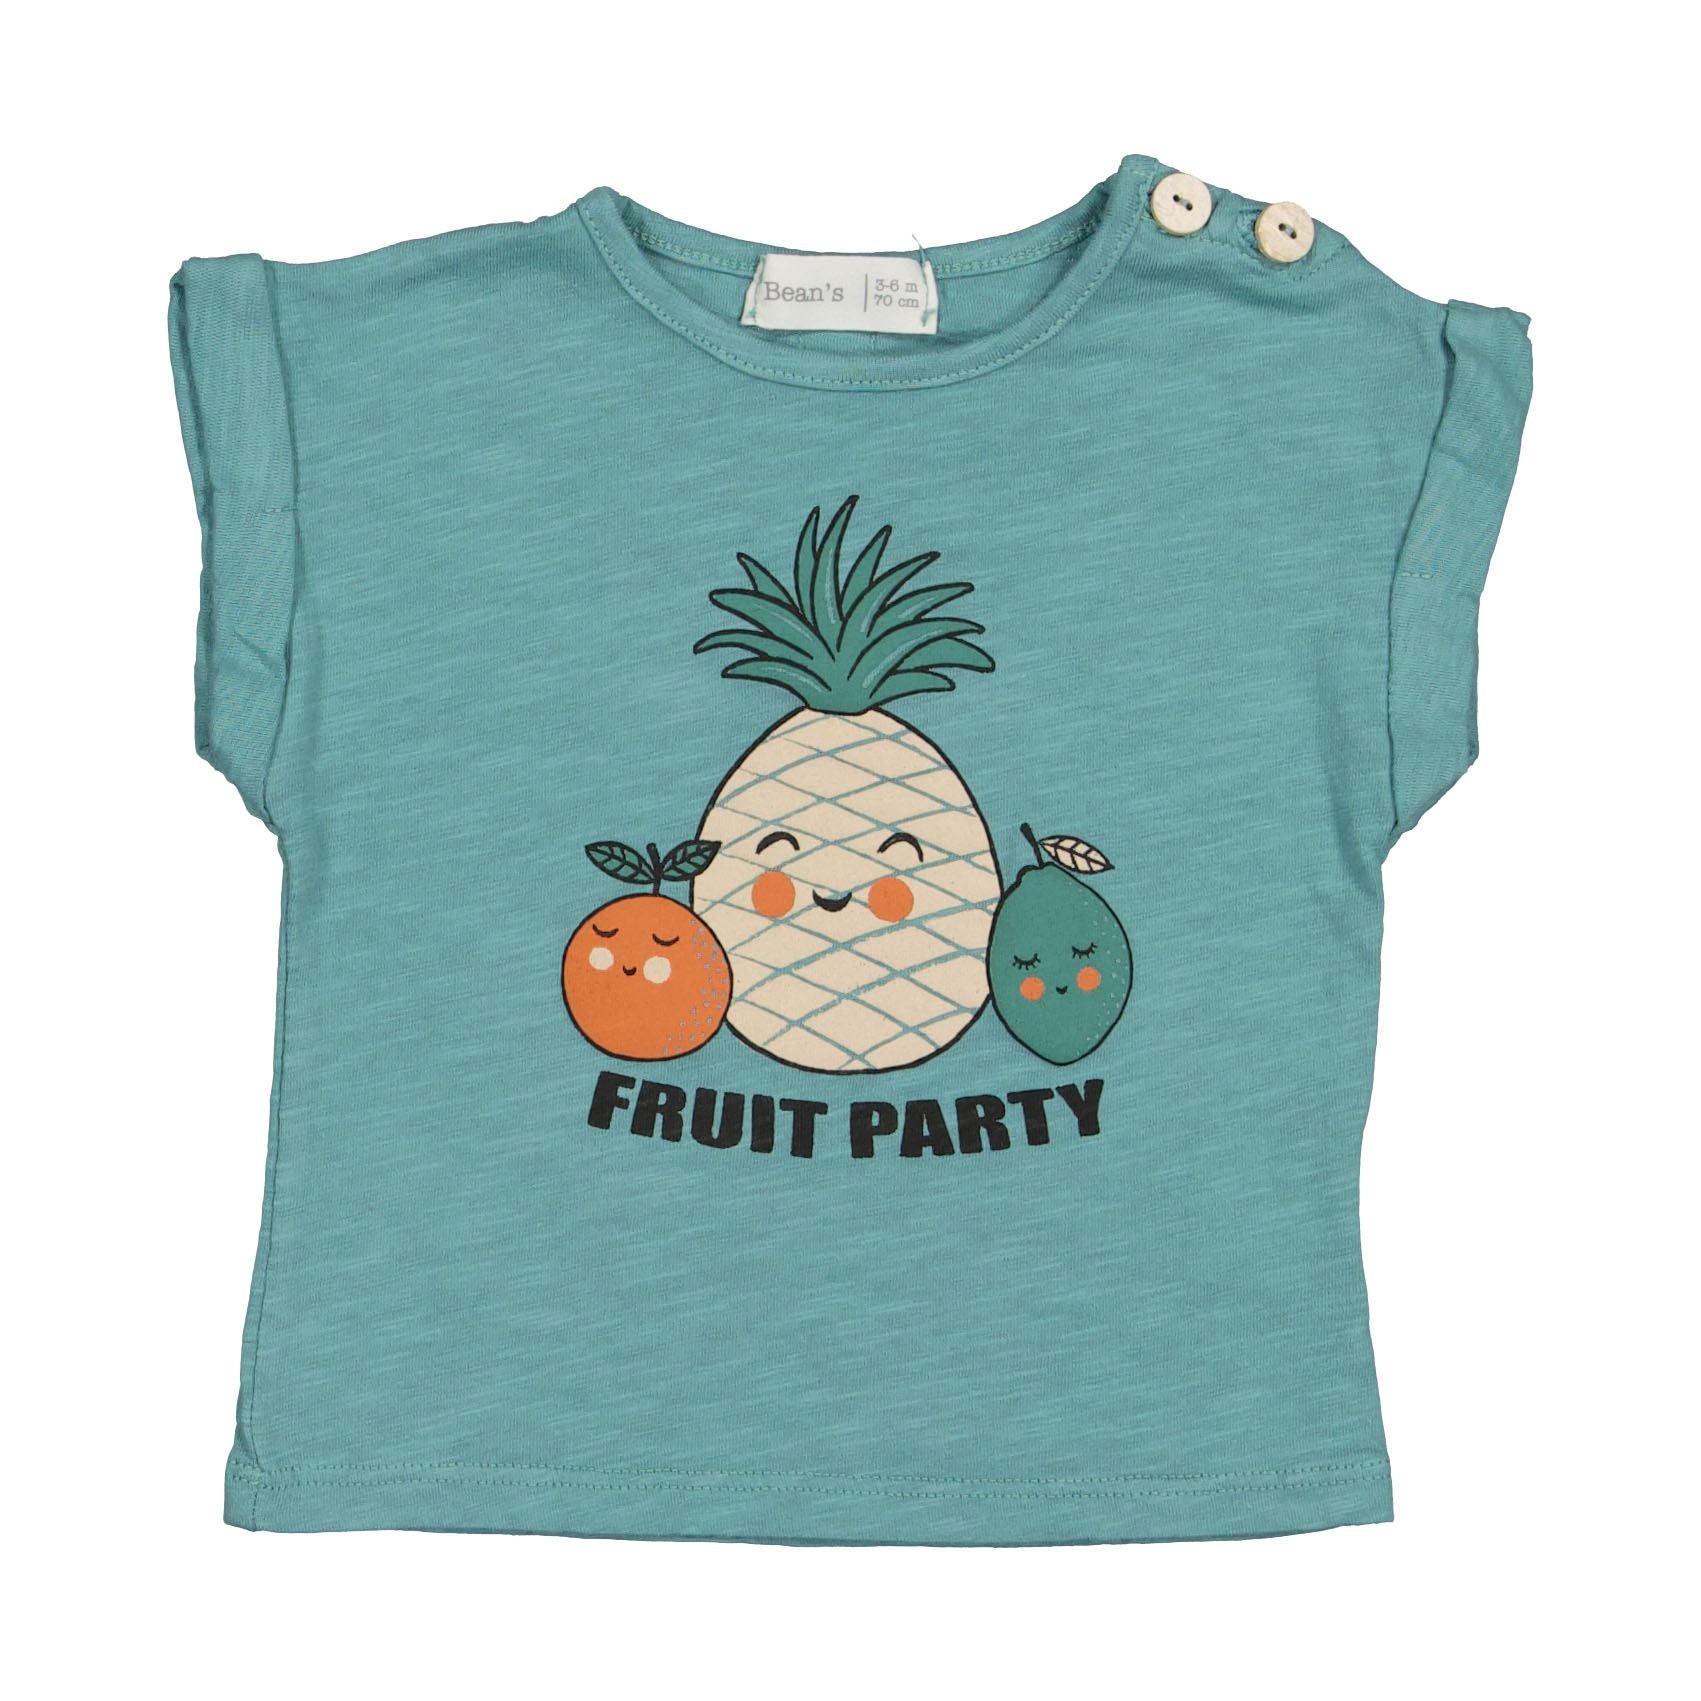 Camiseta MC Banana Fruit Party Seagreen Bean’s-bean's-PetitGegant